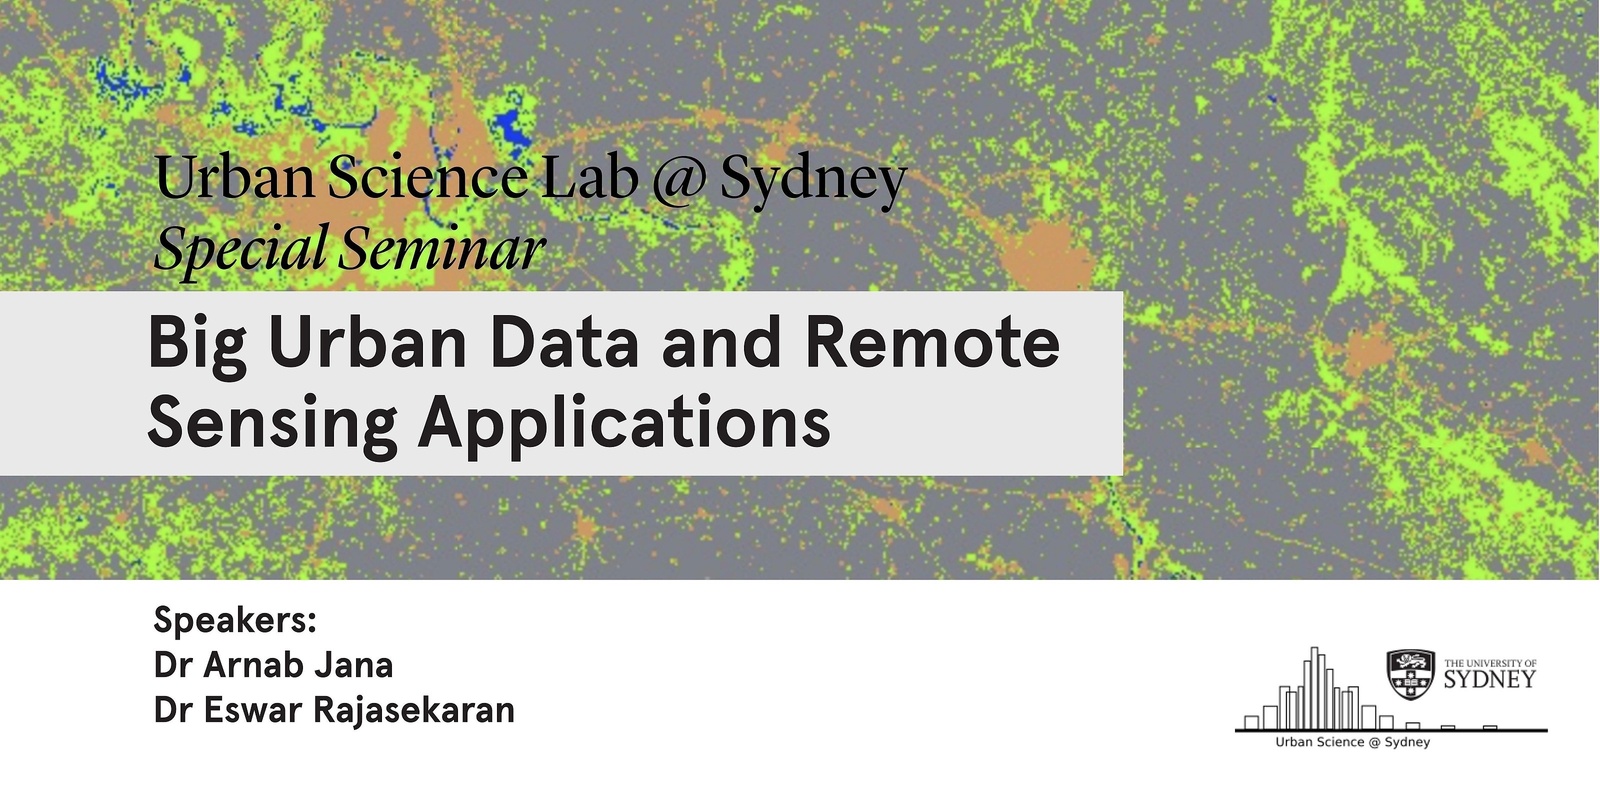 Banner image for Urban Science Lab @ Sydney Special Seminar